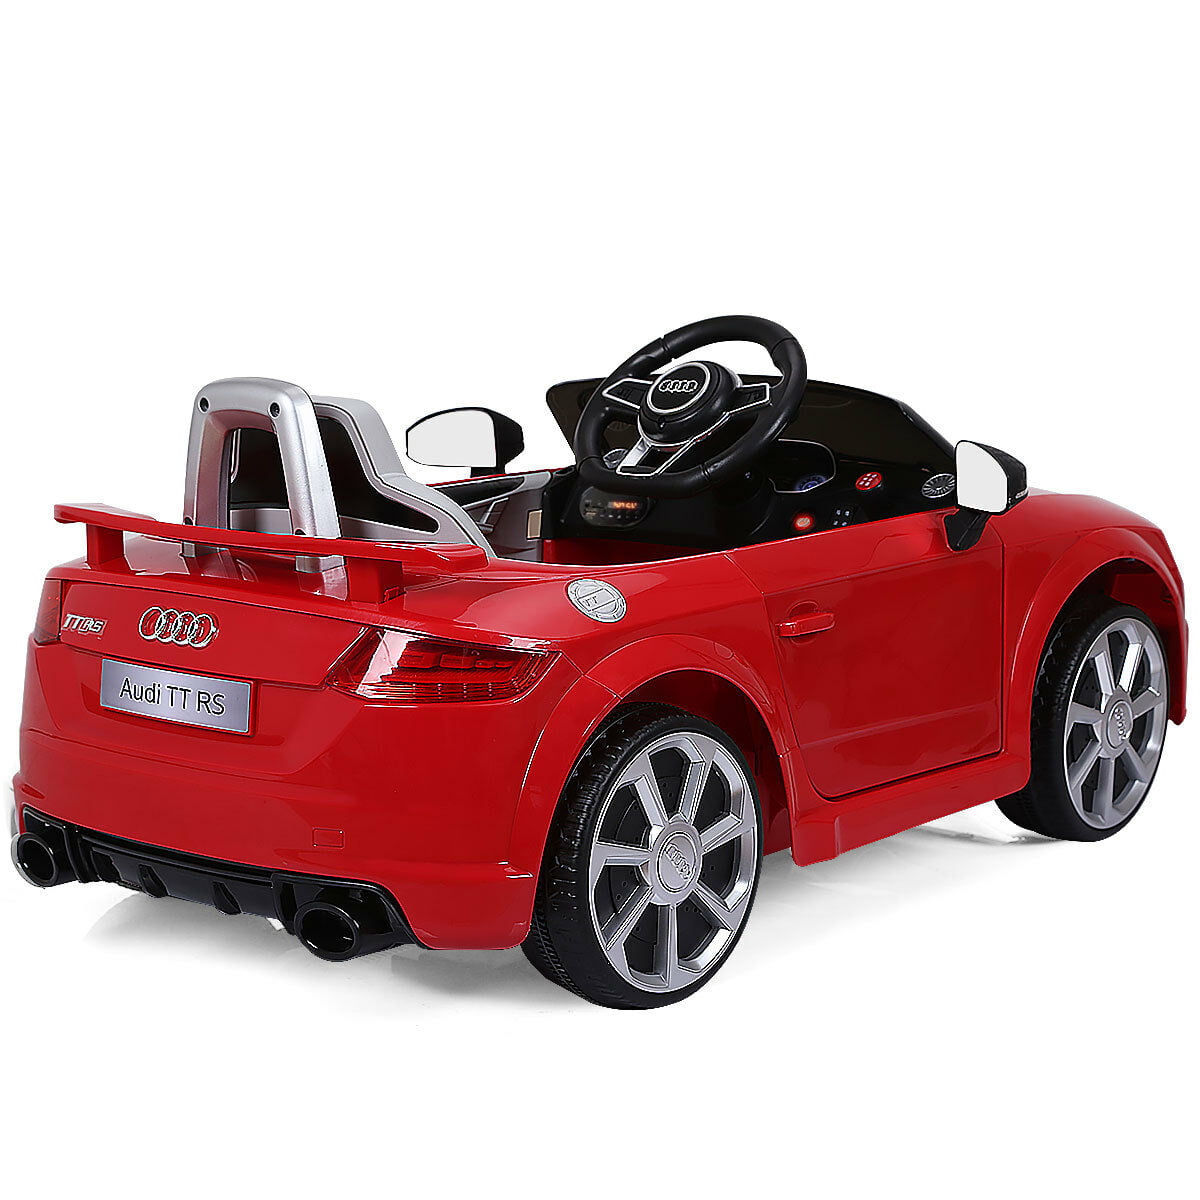 AUDI TT 12velectric Kids Ride on Car Mp3 LED Lights Remote Control Licensed WH for sale online 